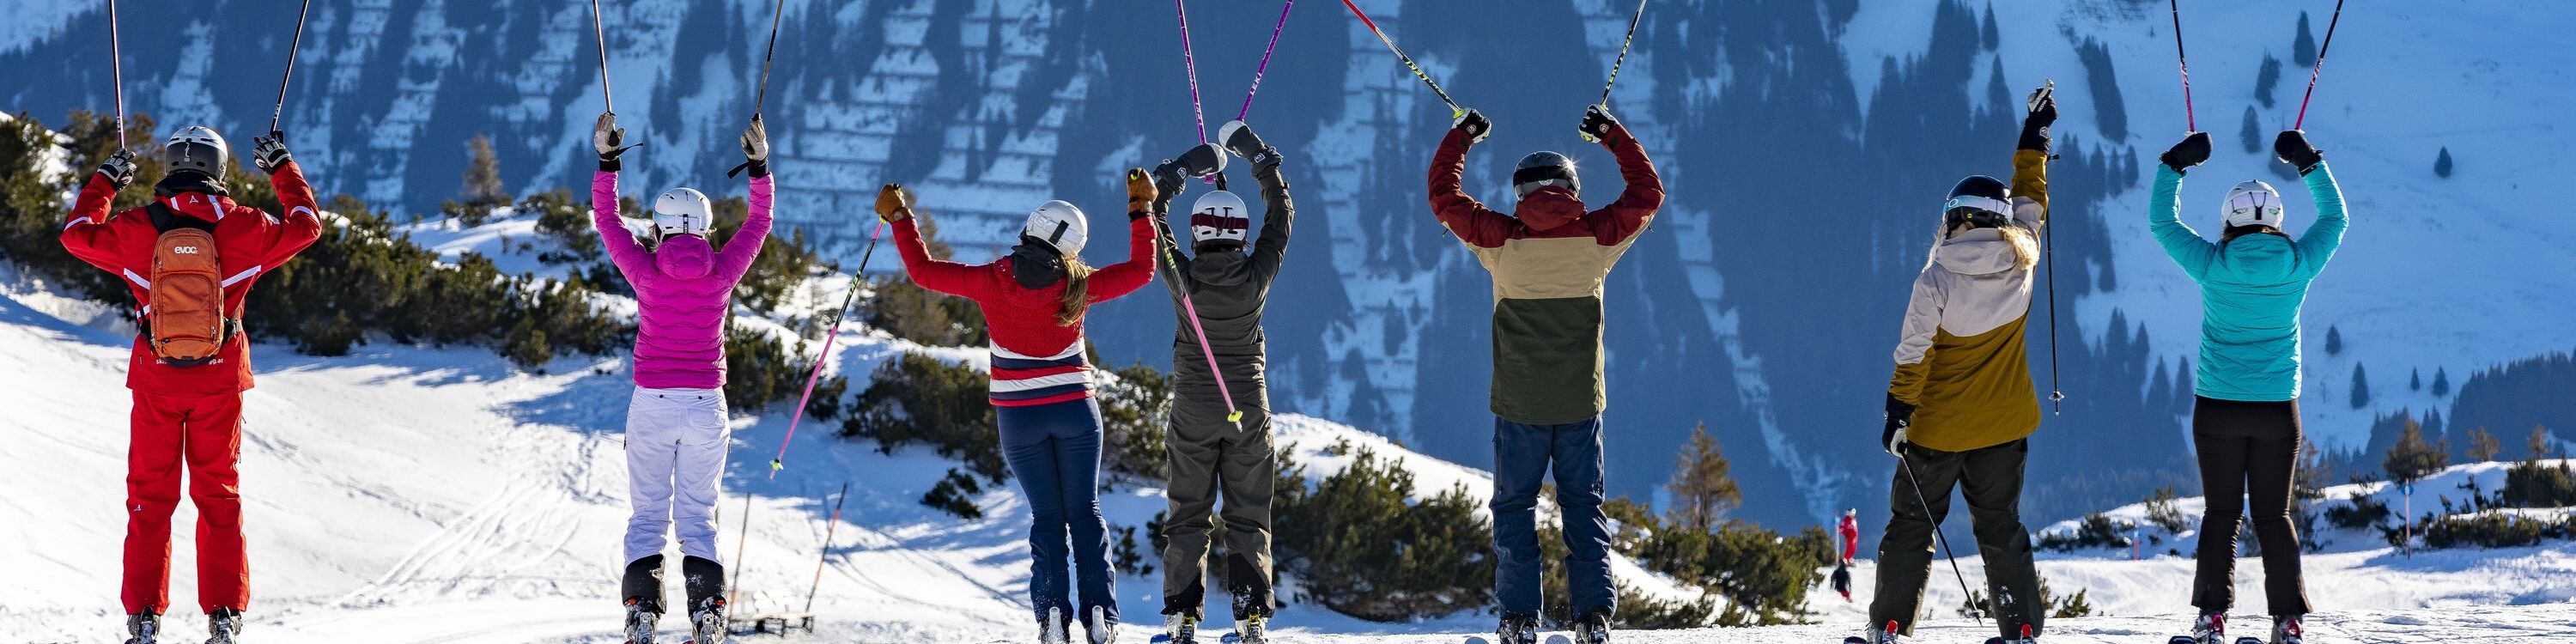 Group skiing course Kleinwalsertal Oberstdorf - Participants stretch ski poles into the air